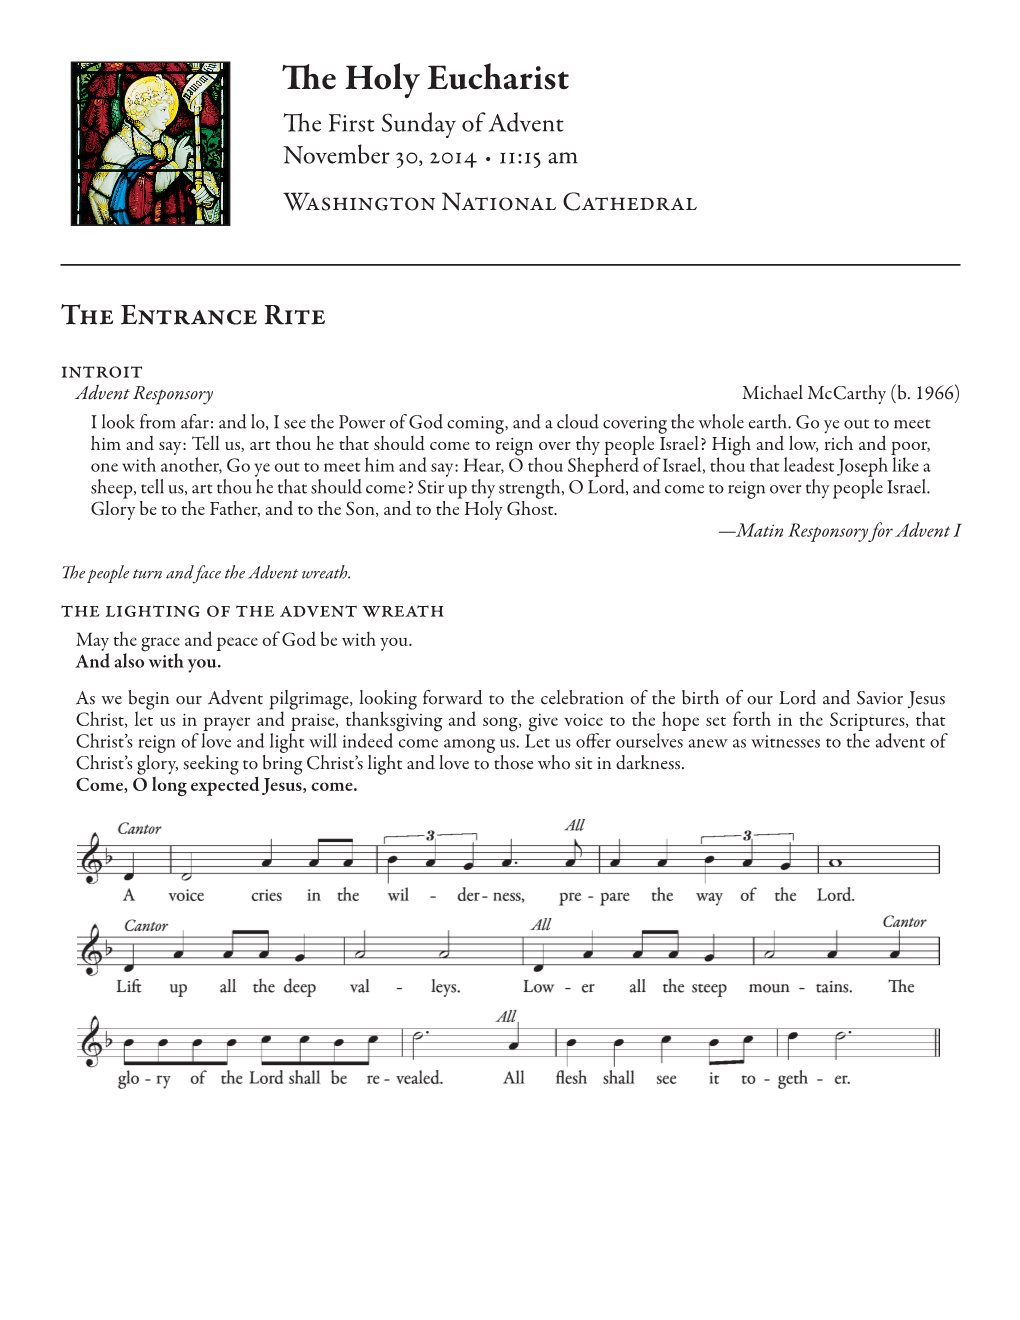 Worship Service Leaflet (Bulletin) for Holy Eucharist, Sunday, November